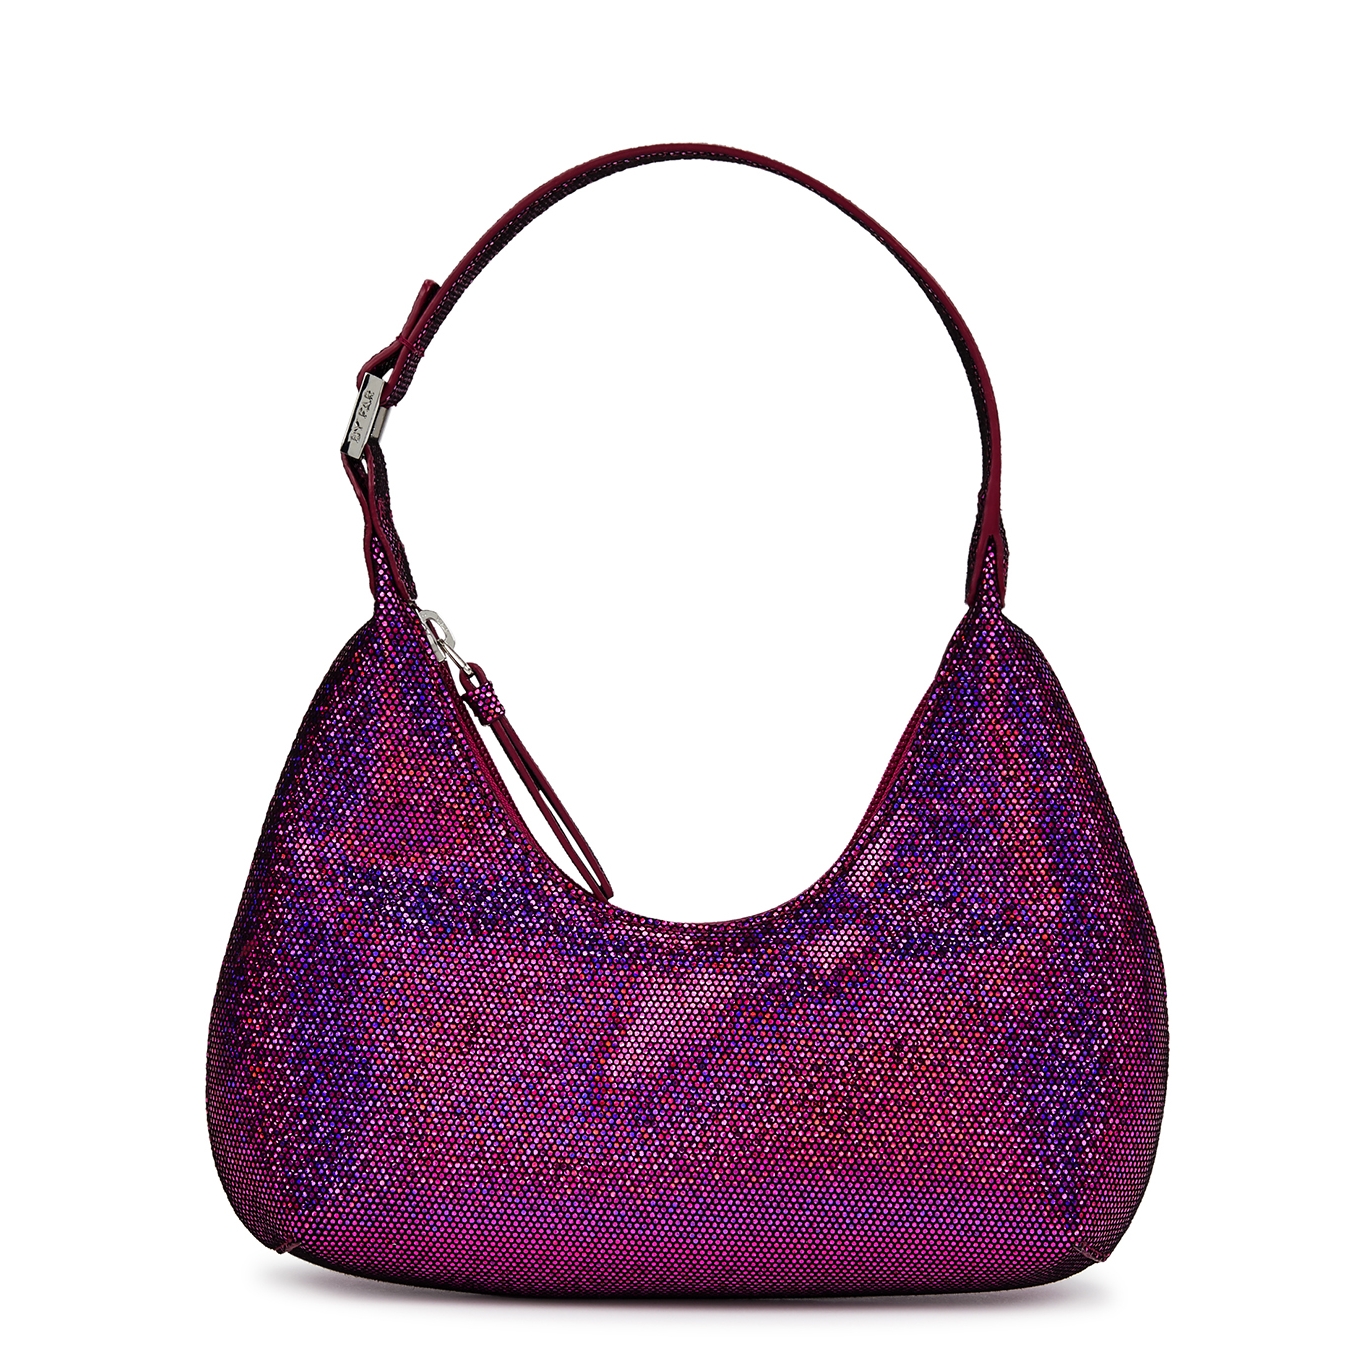 BY Far Baby Amber Foil-print Leather Shoulder Bag - Pink